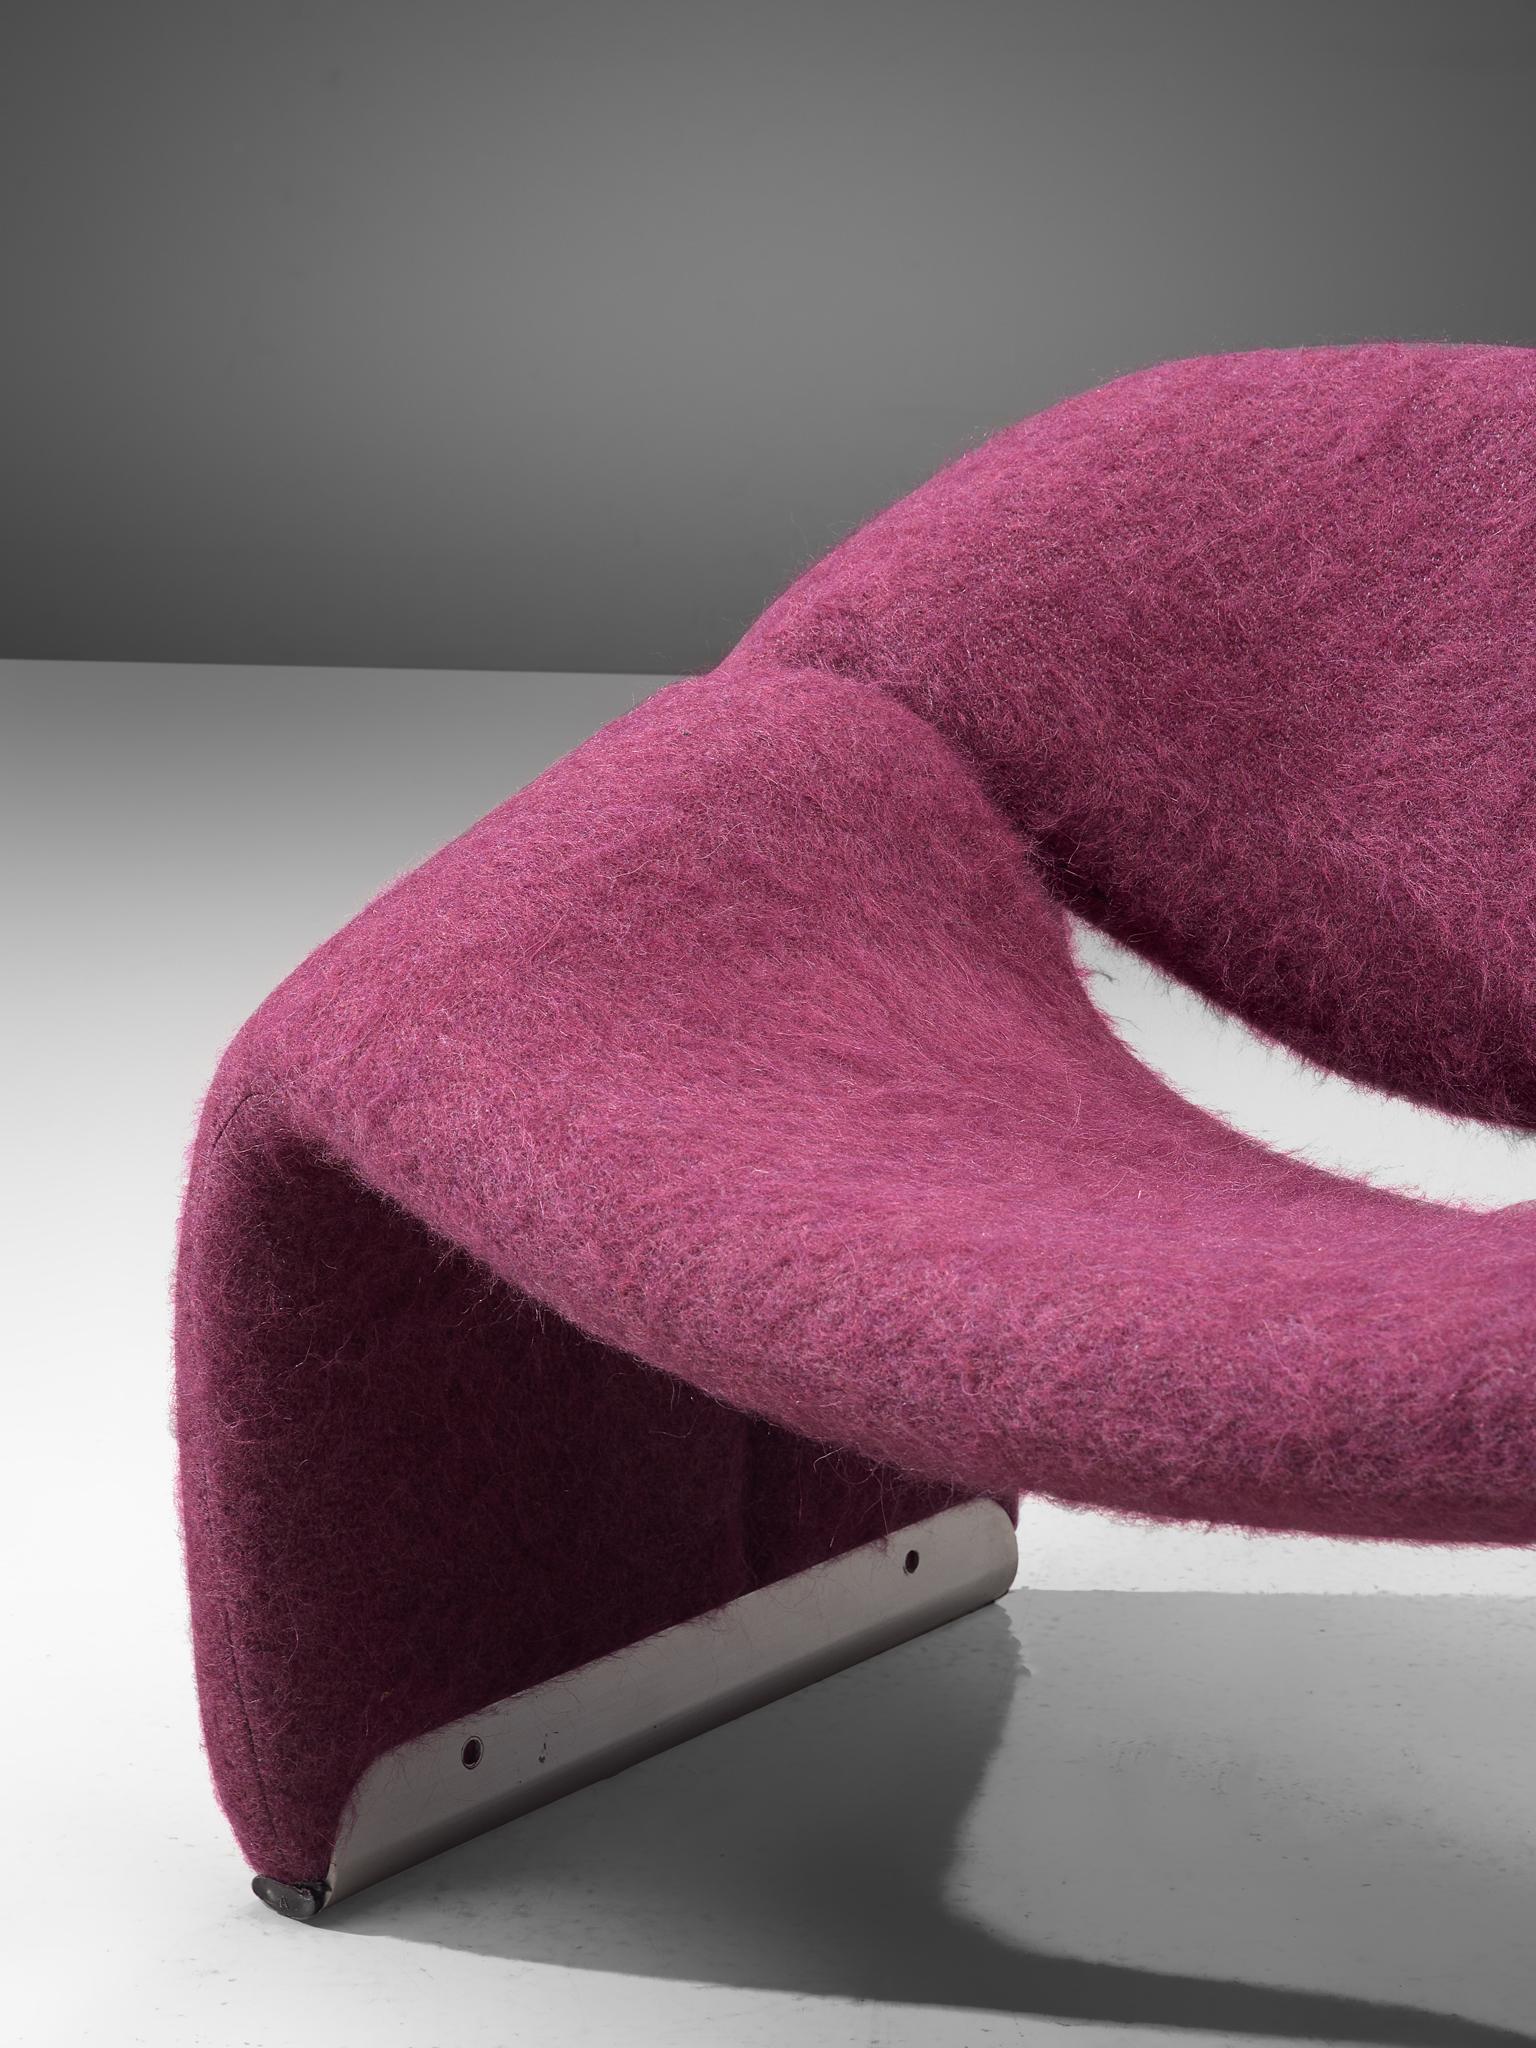 Aluminum Pierre Paulin 'Groovy' Lounge Chairs Customizable in Pierre Frey Wool Upholstery